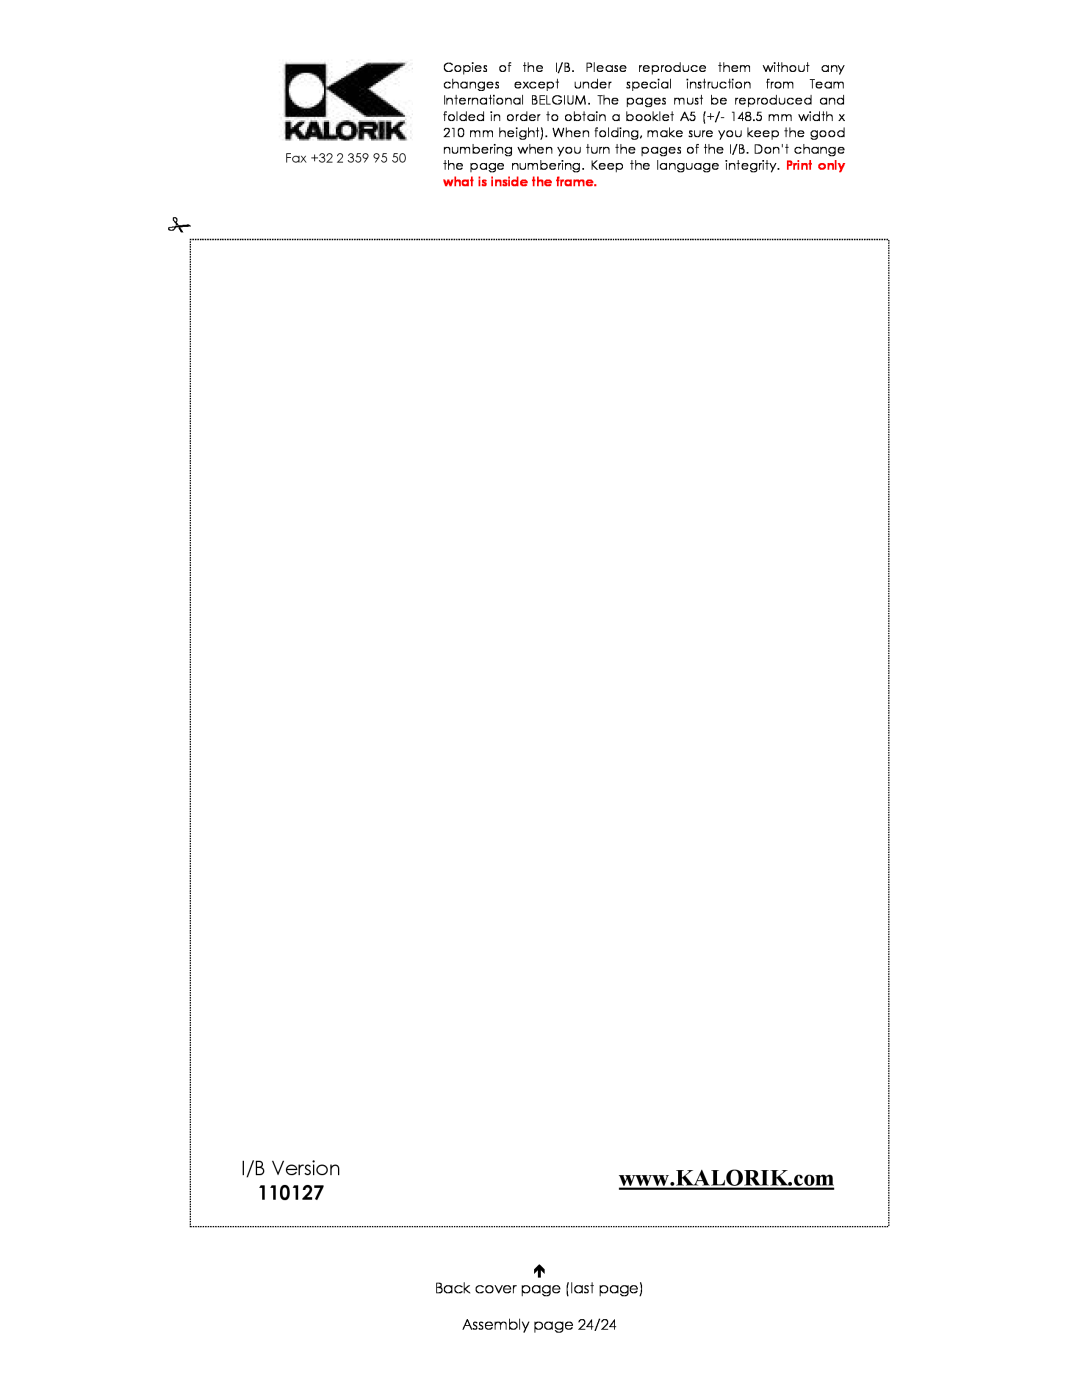 Kalorik 30865, 14244, 35481 manual I/B Version, 110127, Back cover page last page Assembly page 24/24 